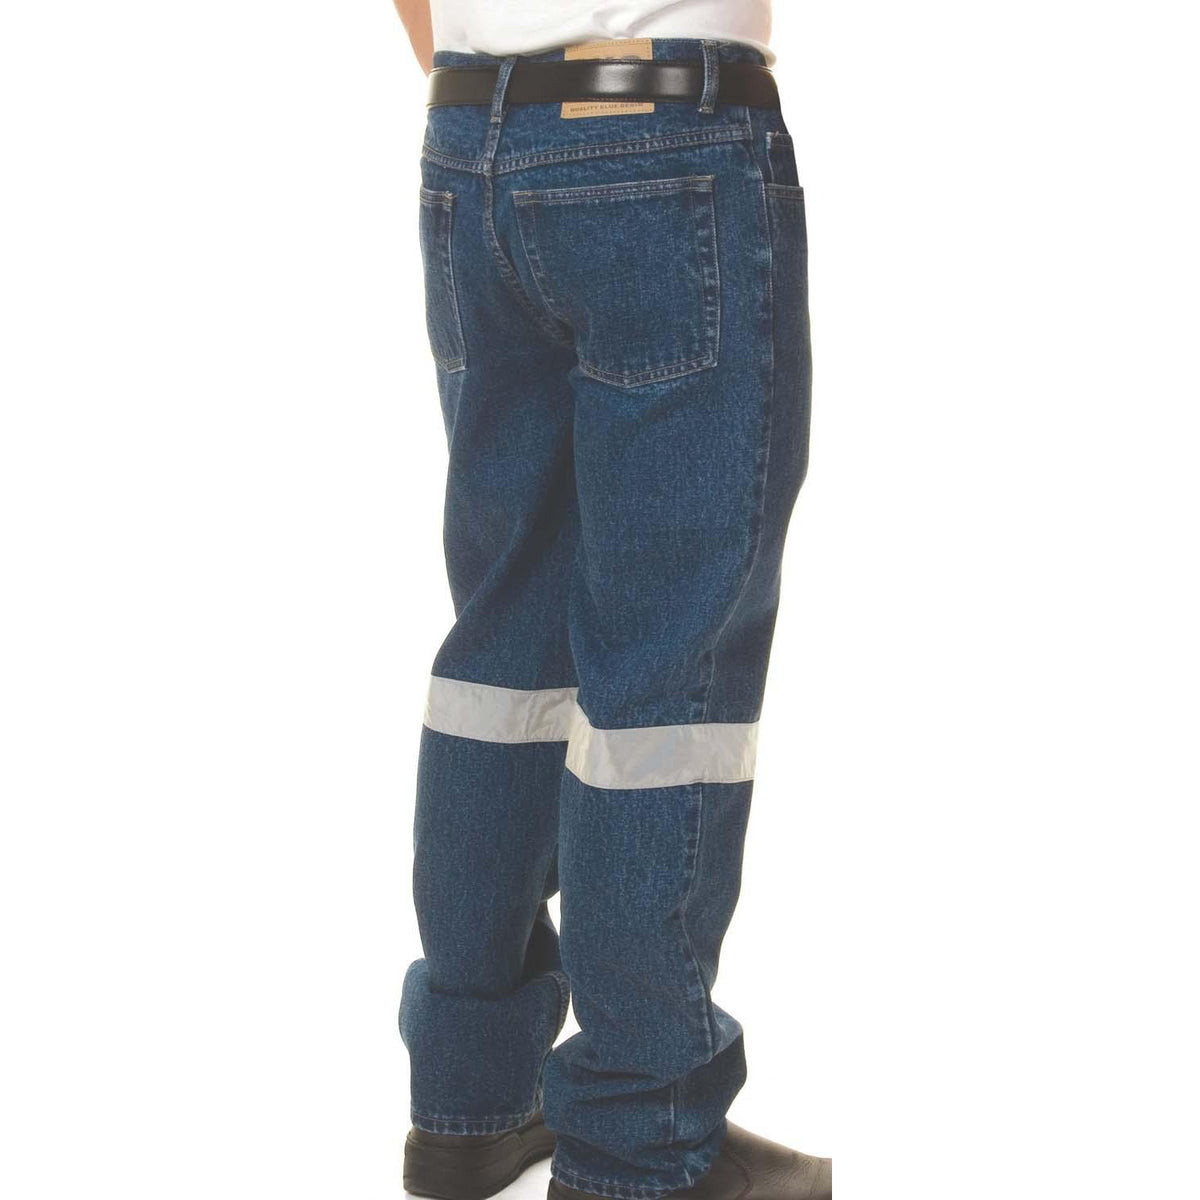 Buy DNC Taped Stretch Denim Jeans - 3347 Online | Queensland Workwear ...